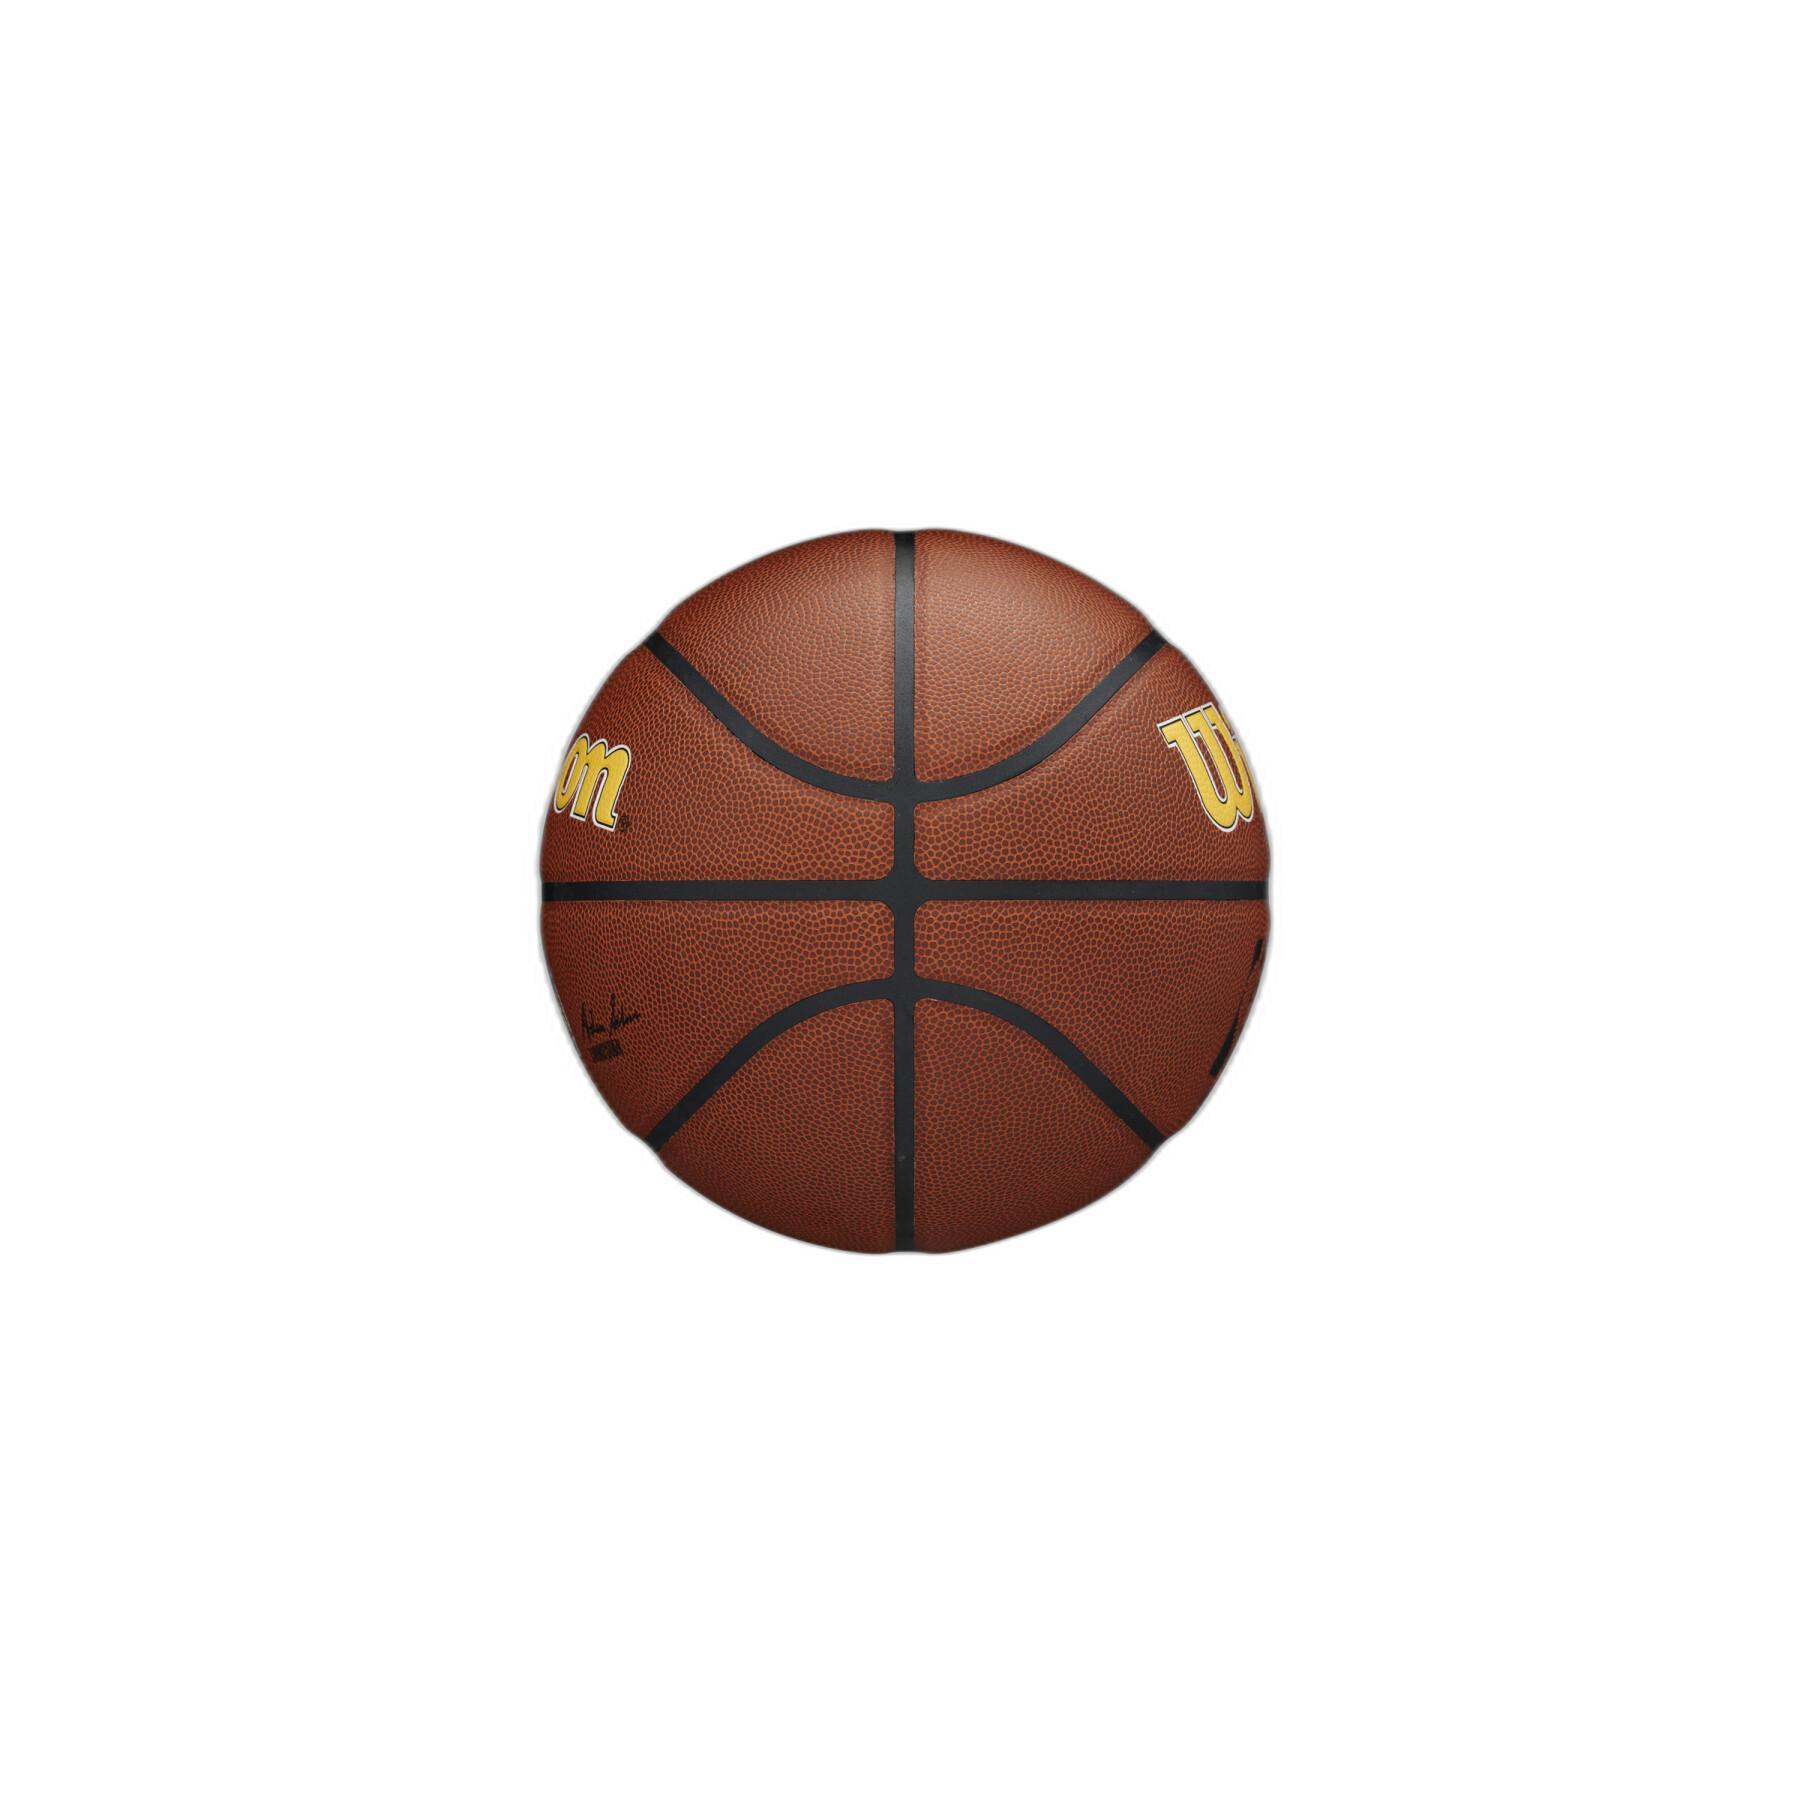 Ballon Indiana Pacers NBA Team Alliance